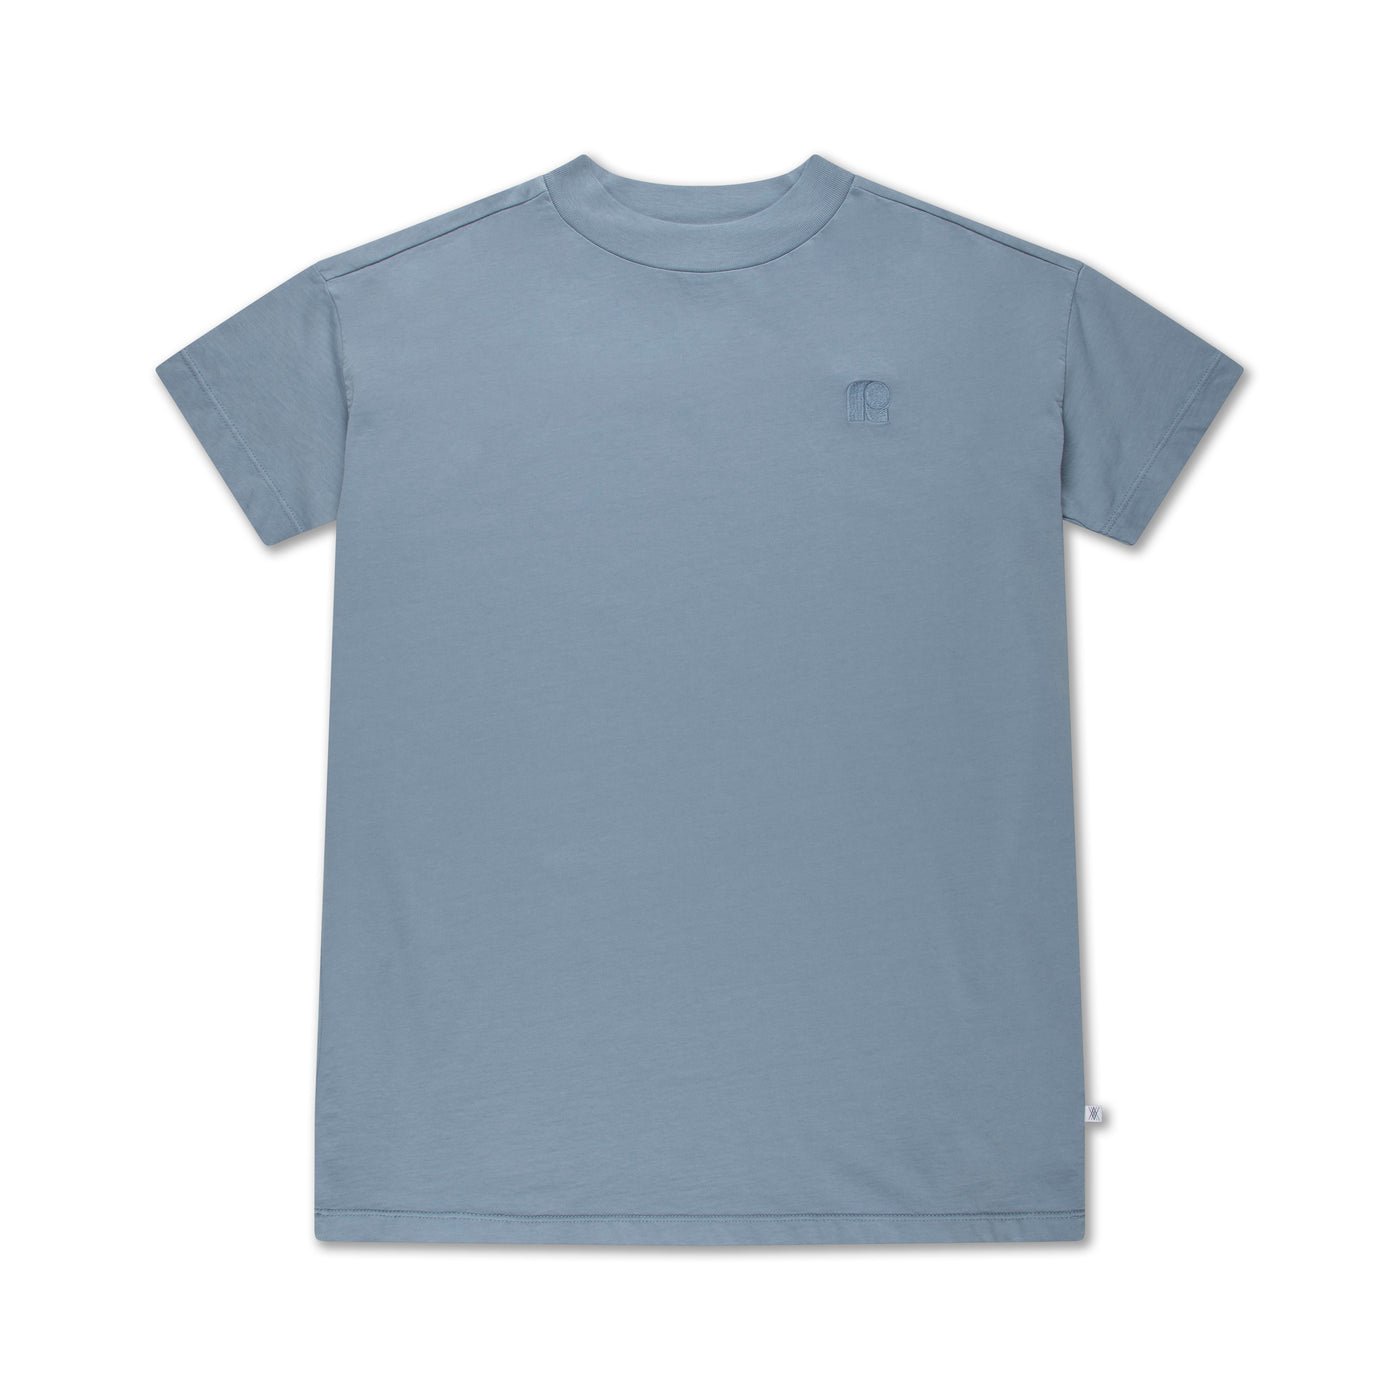 tee shirt dress - night fog blue